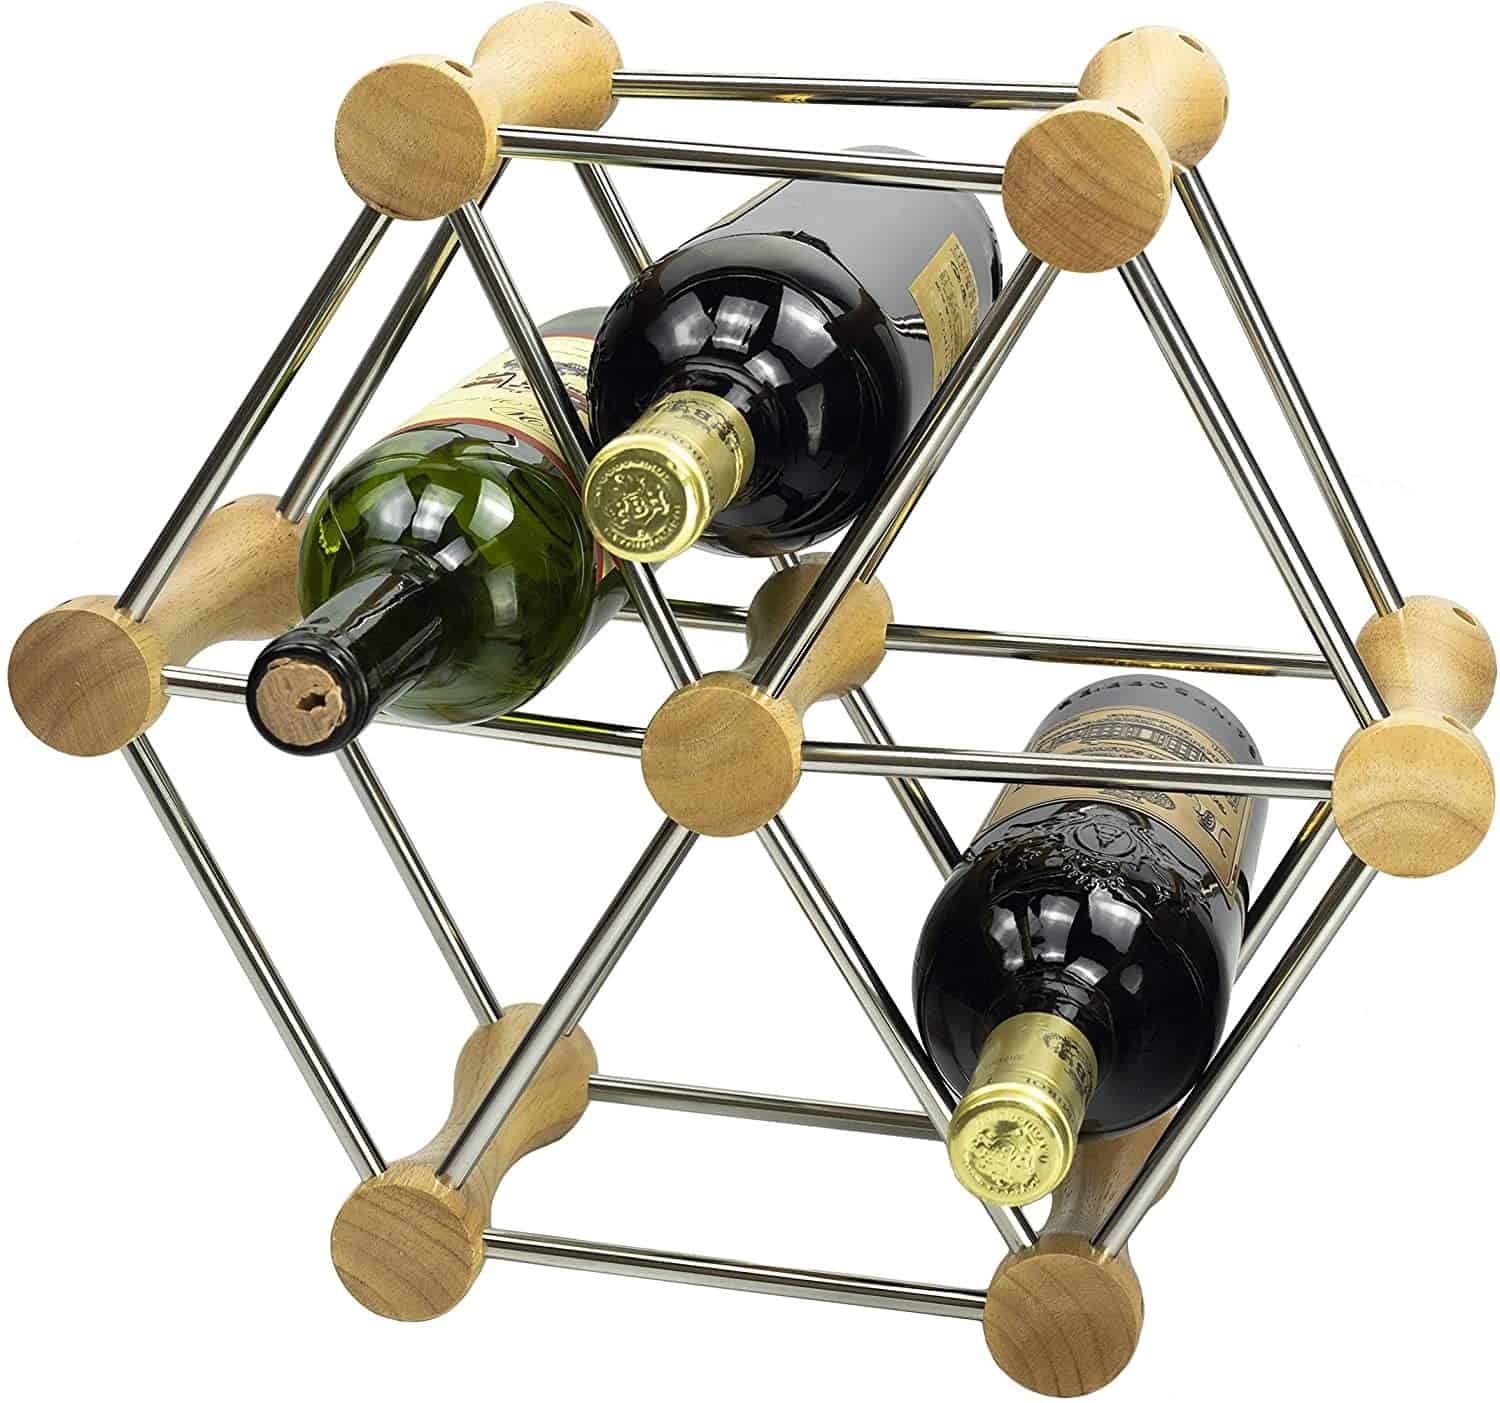 4. Hexagon Shaped Metal Wine Rack